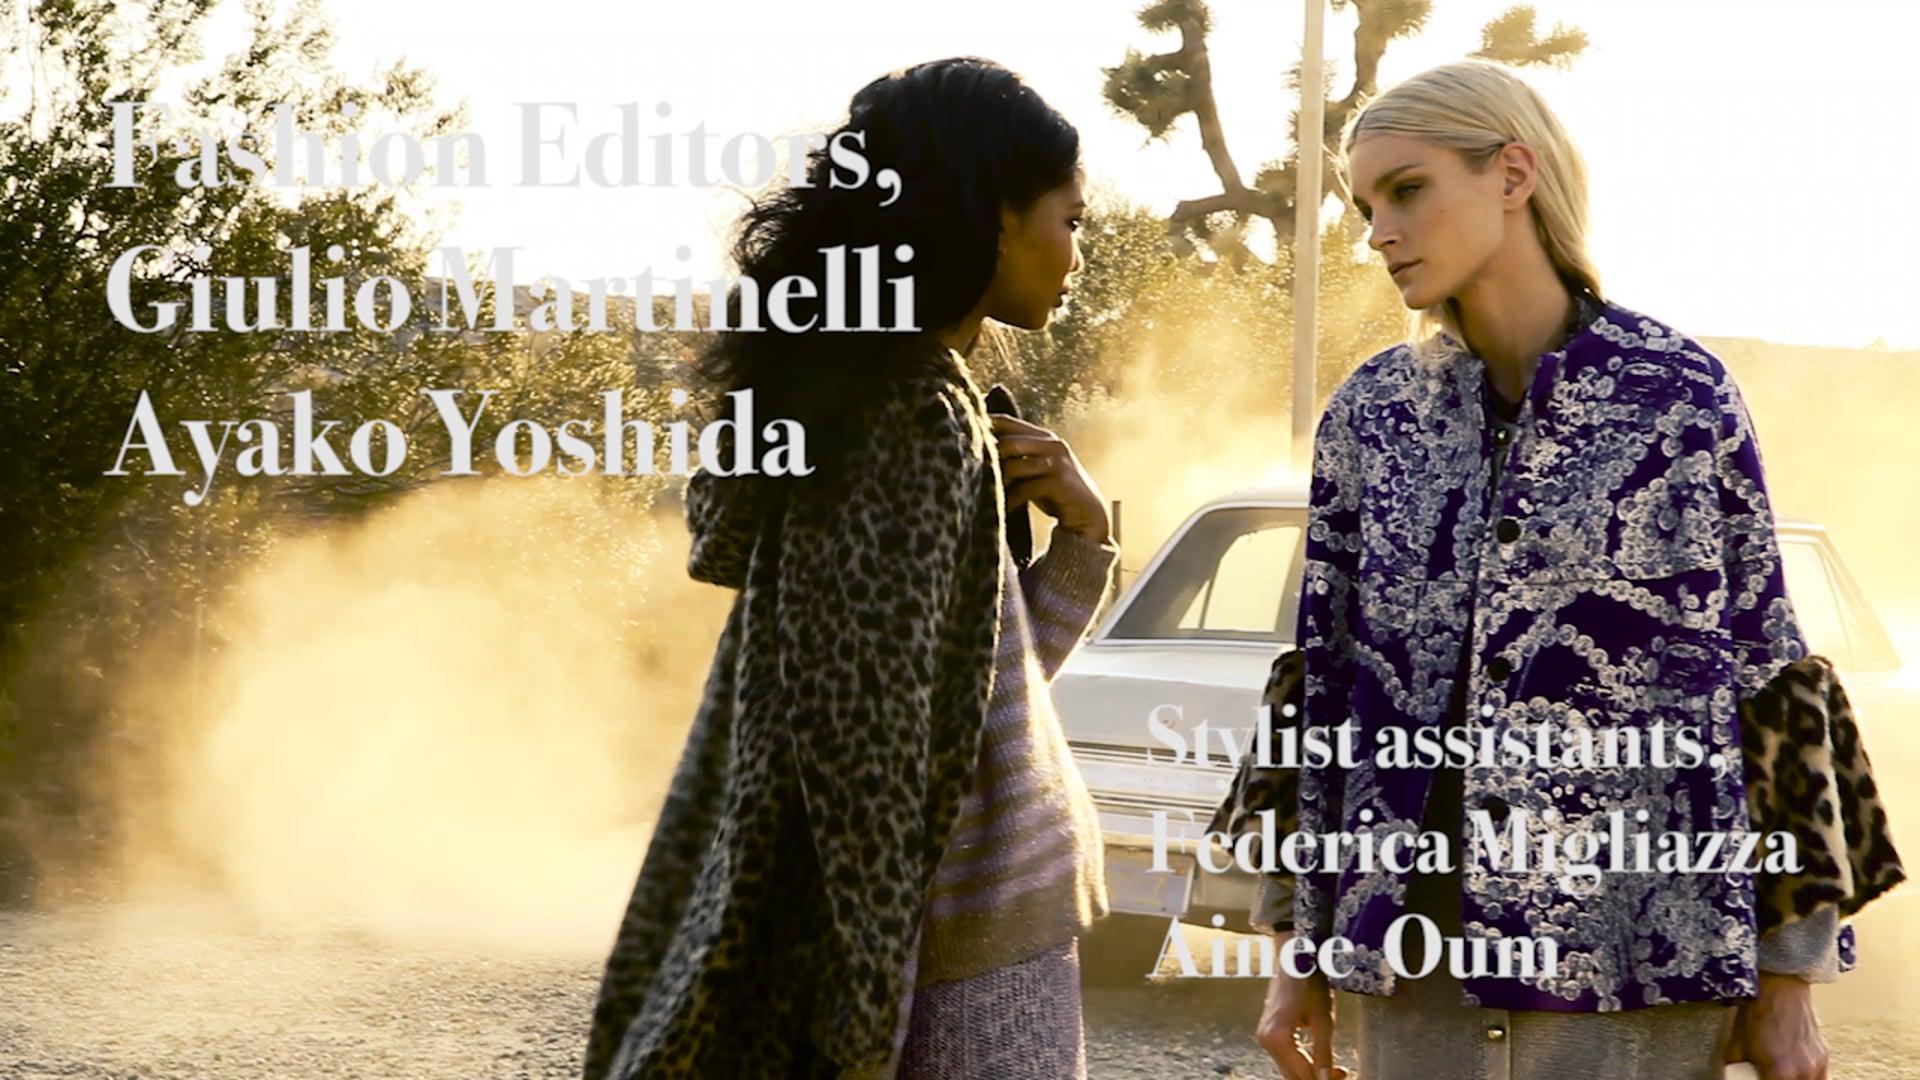 Vogue Italia with Chanel Iman and Jessica Stam